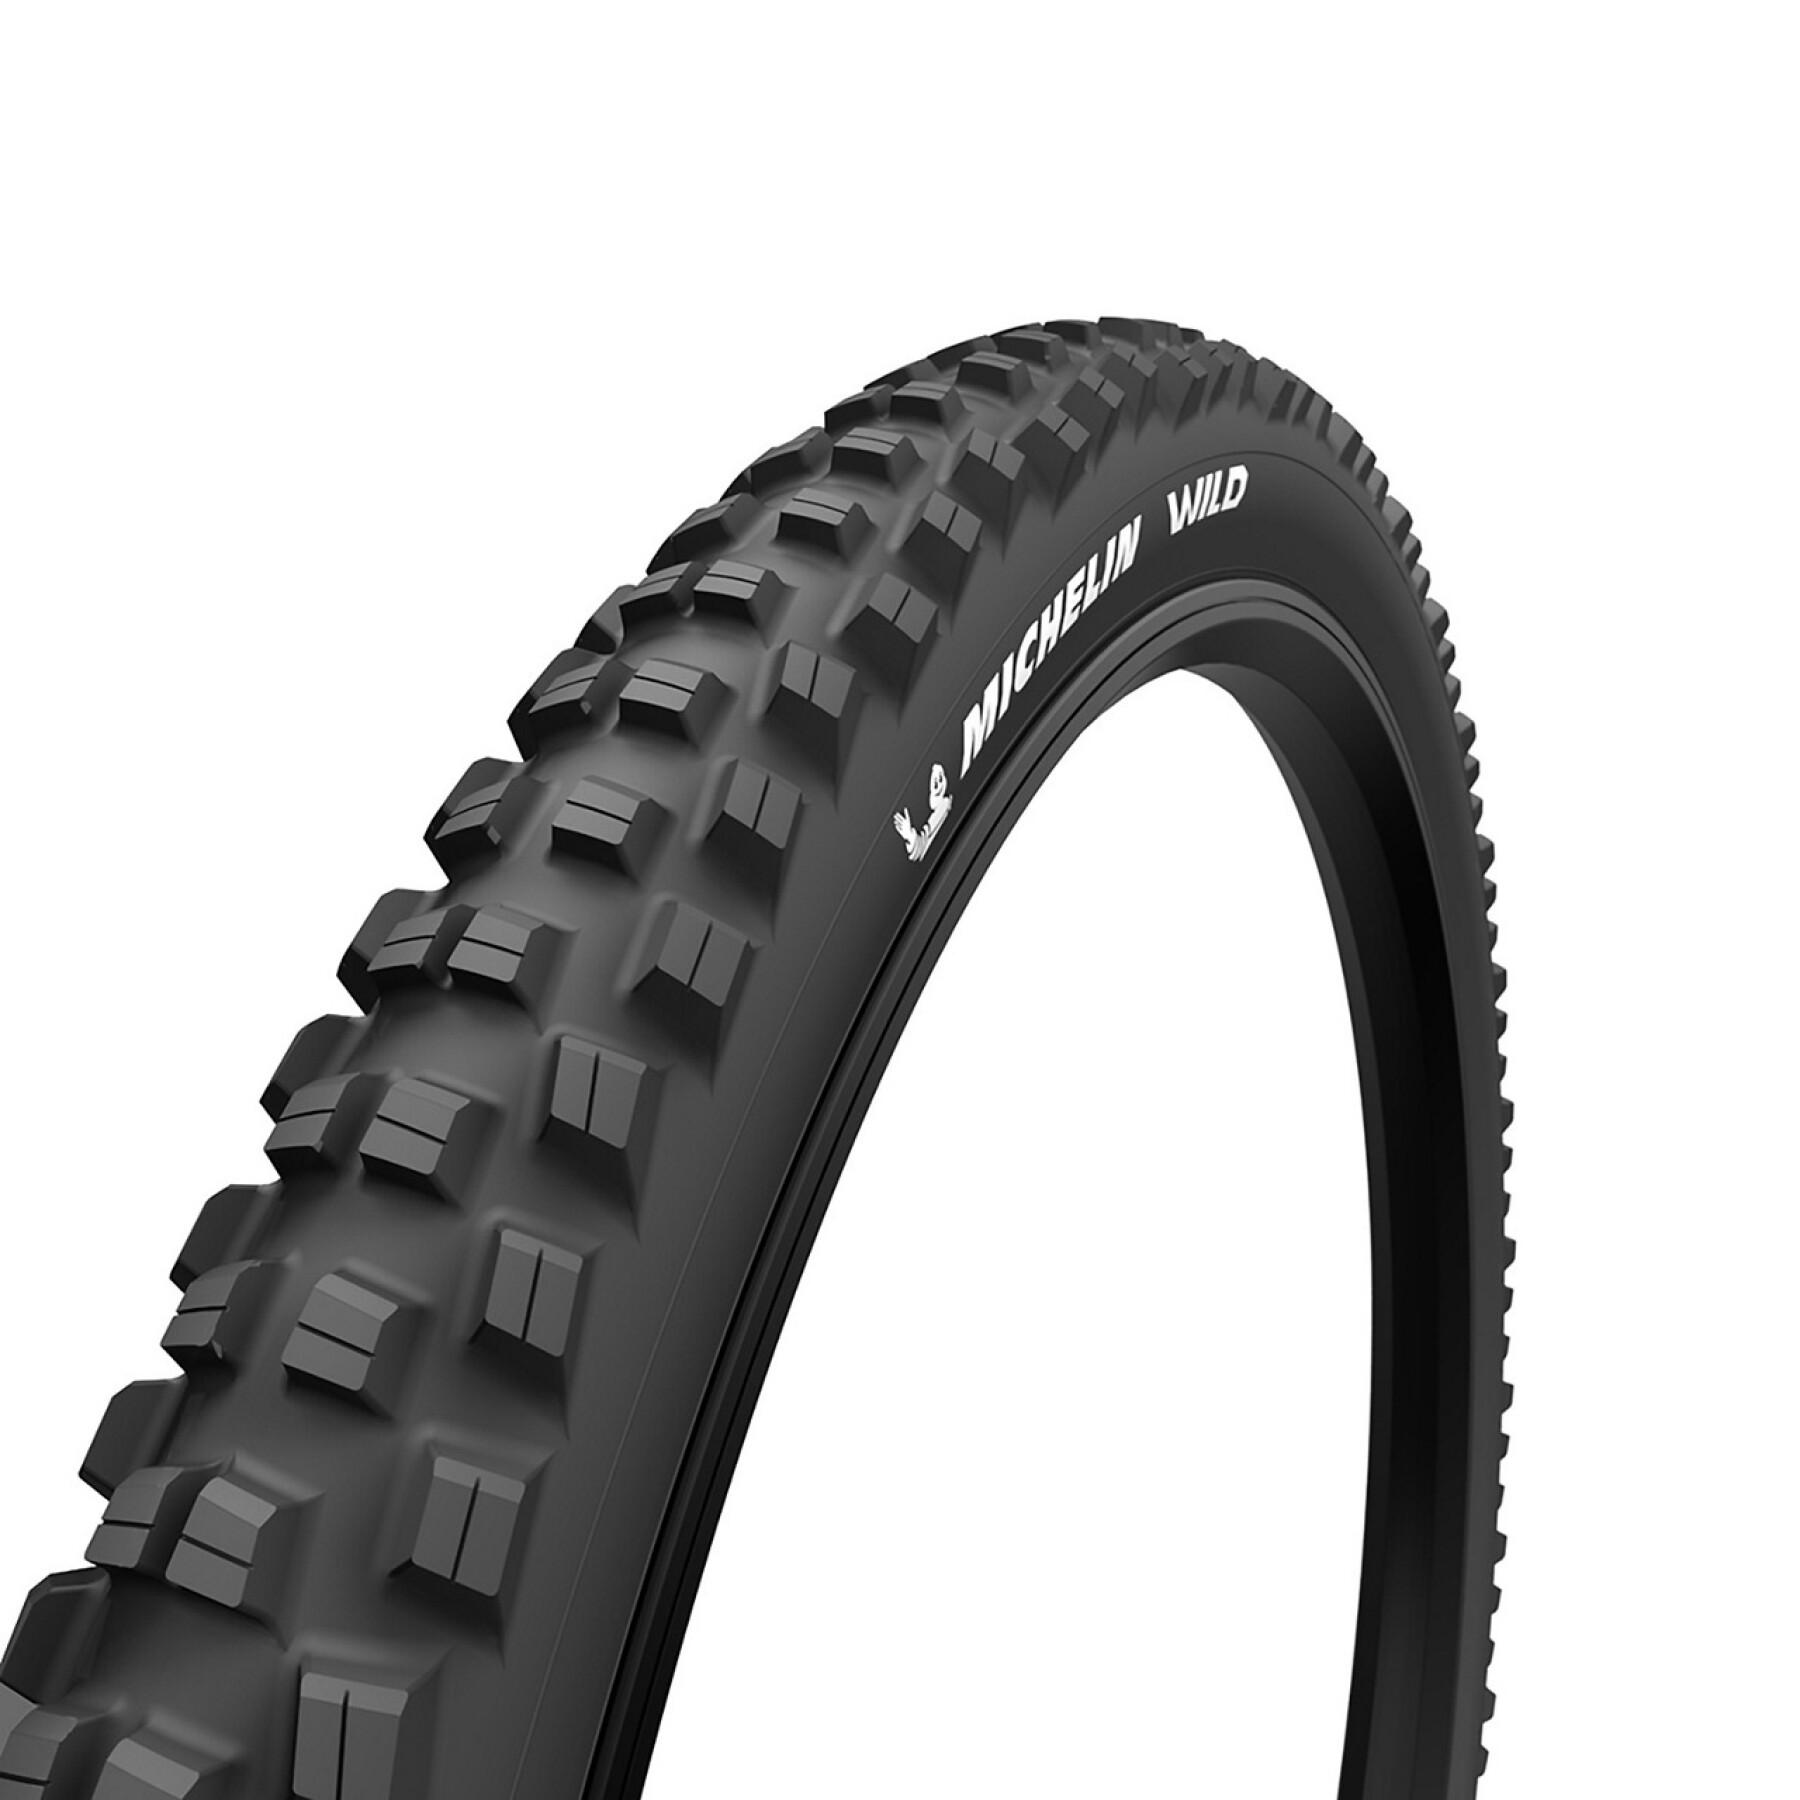 Rigid bead mountain bike tire Michelin Wild Access